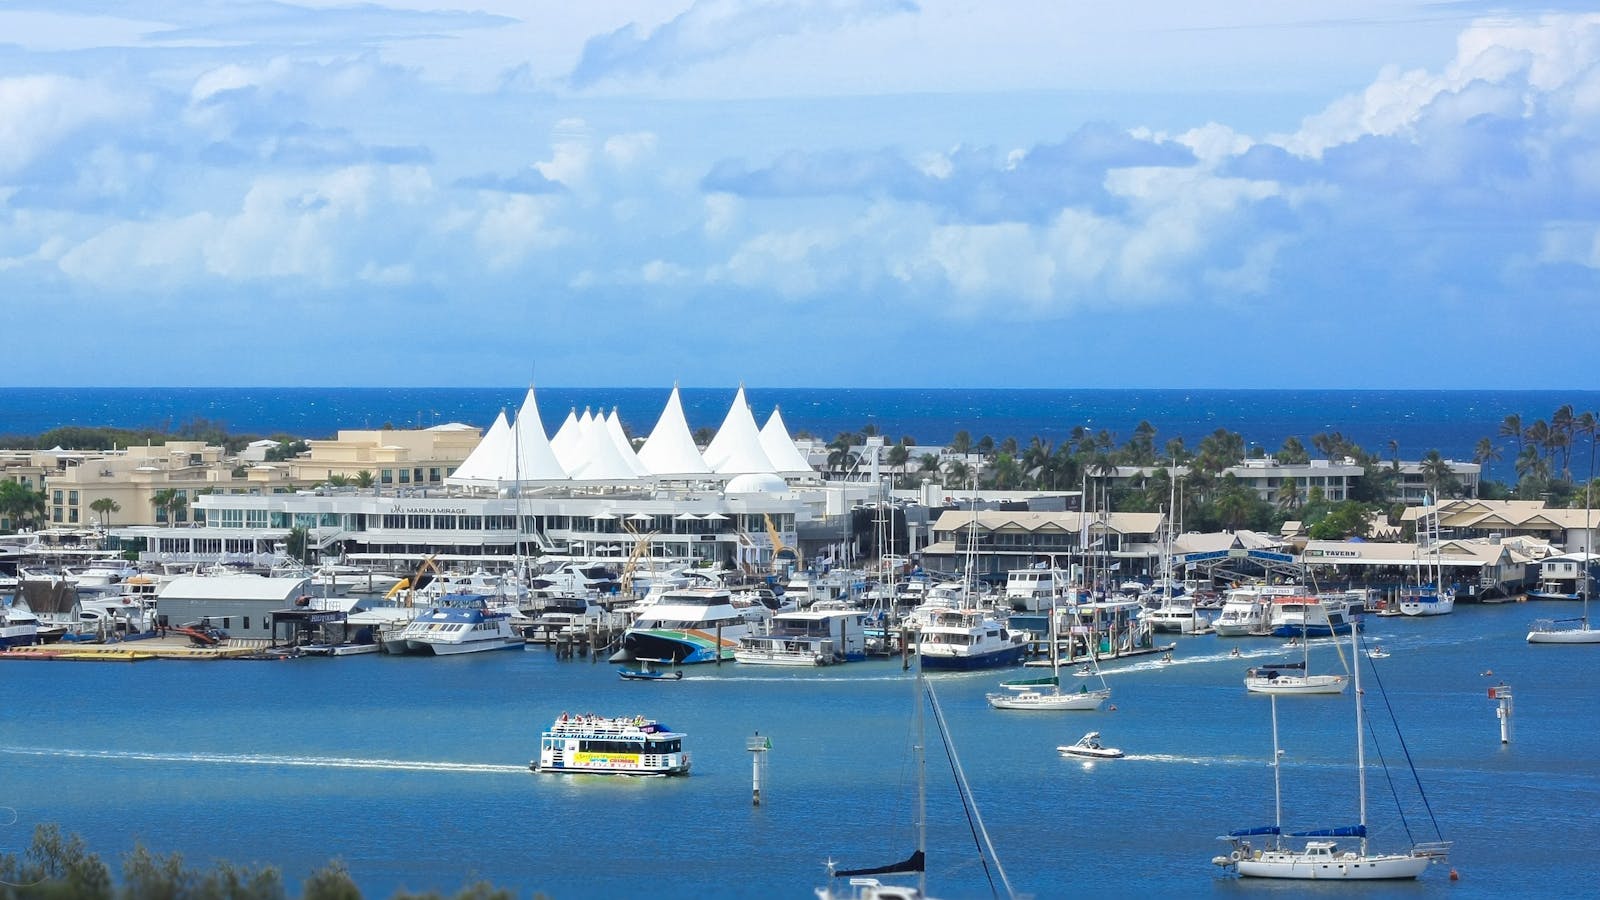 Marina mirage gold coast river cruise sightseeing